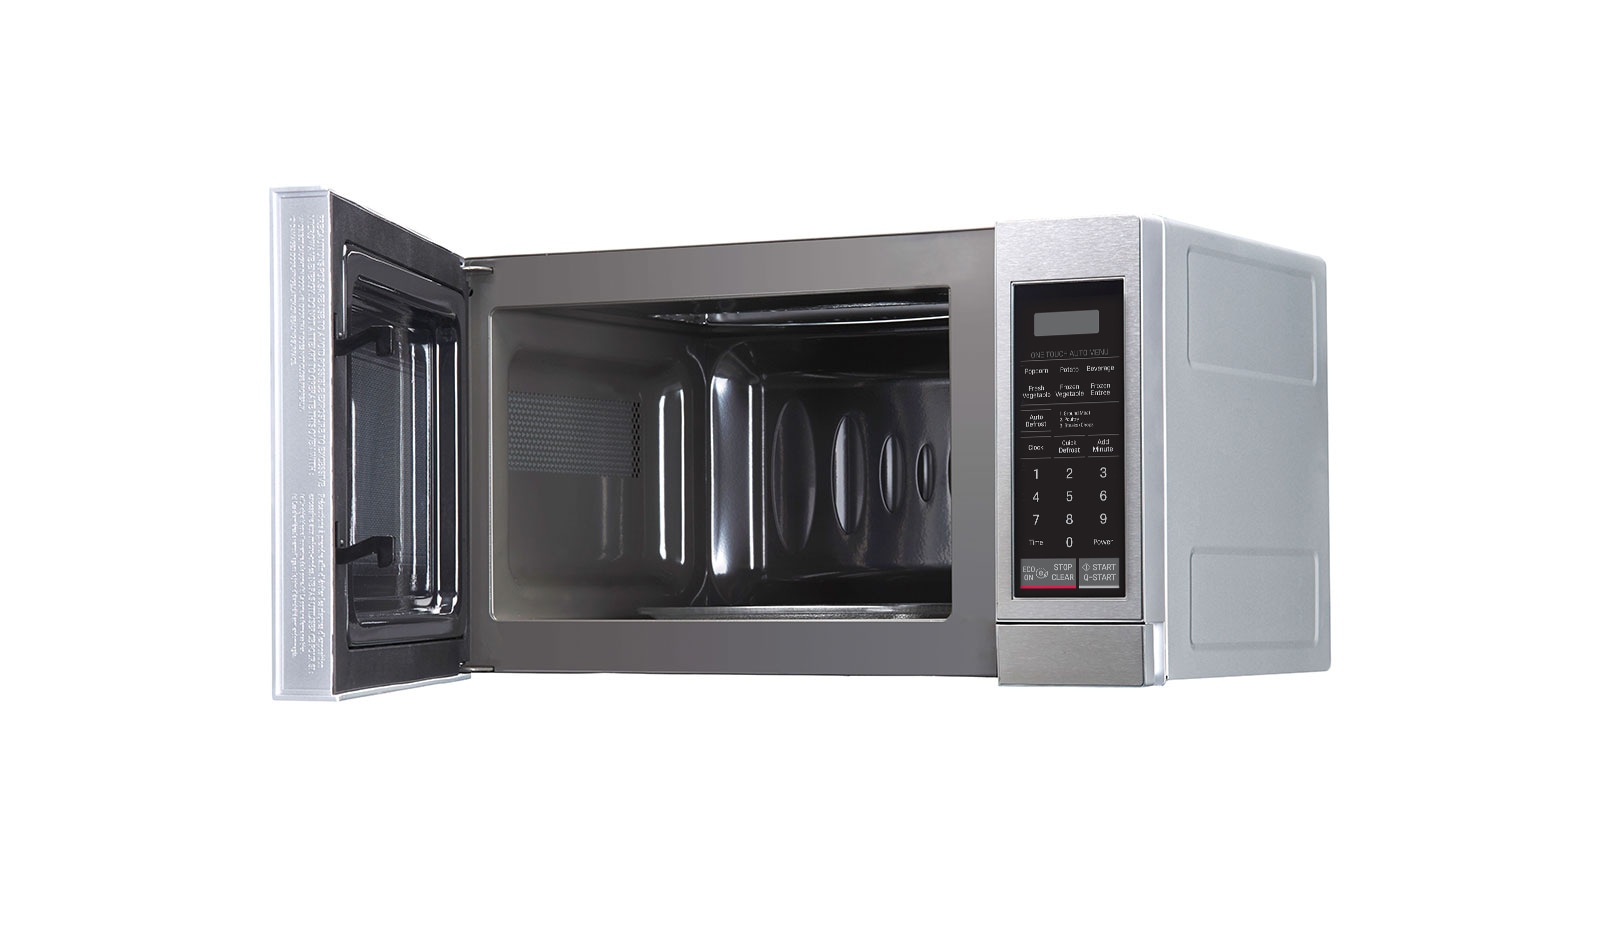 LG Microwaves | MS2044VS 20L Stainless Steel Microwave Oven | LG Australia